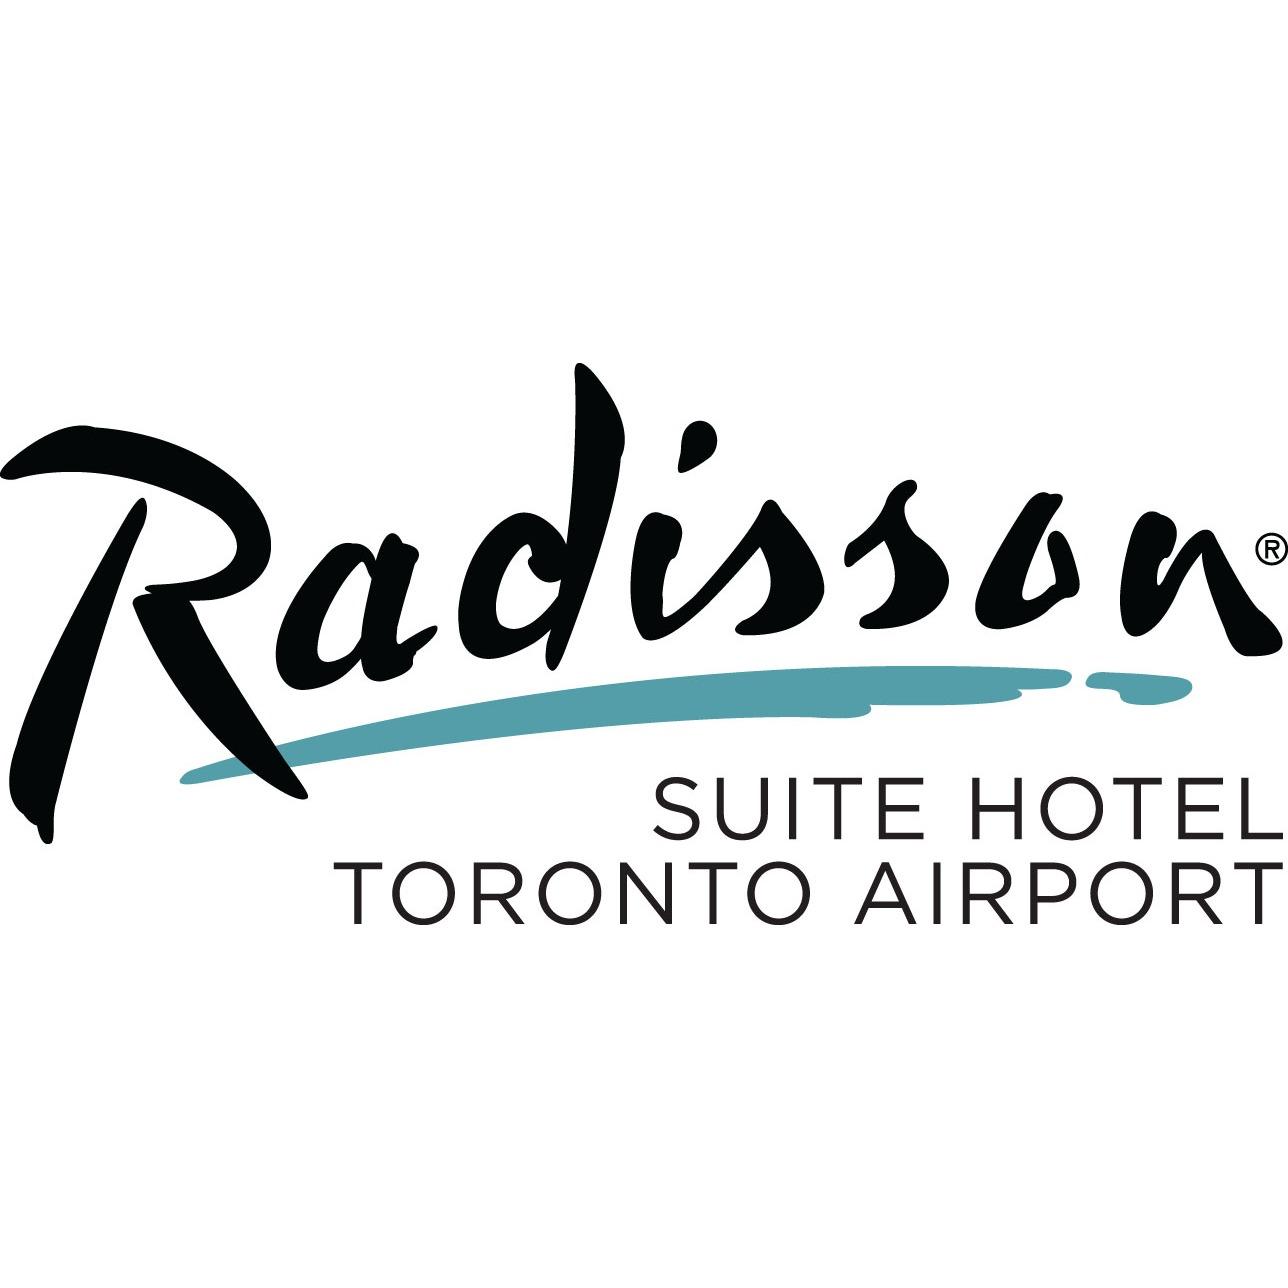 Radisson Suite Hotel Toronto Airport - Closed Toronto